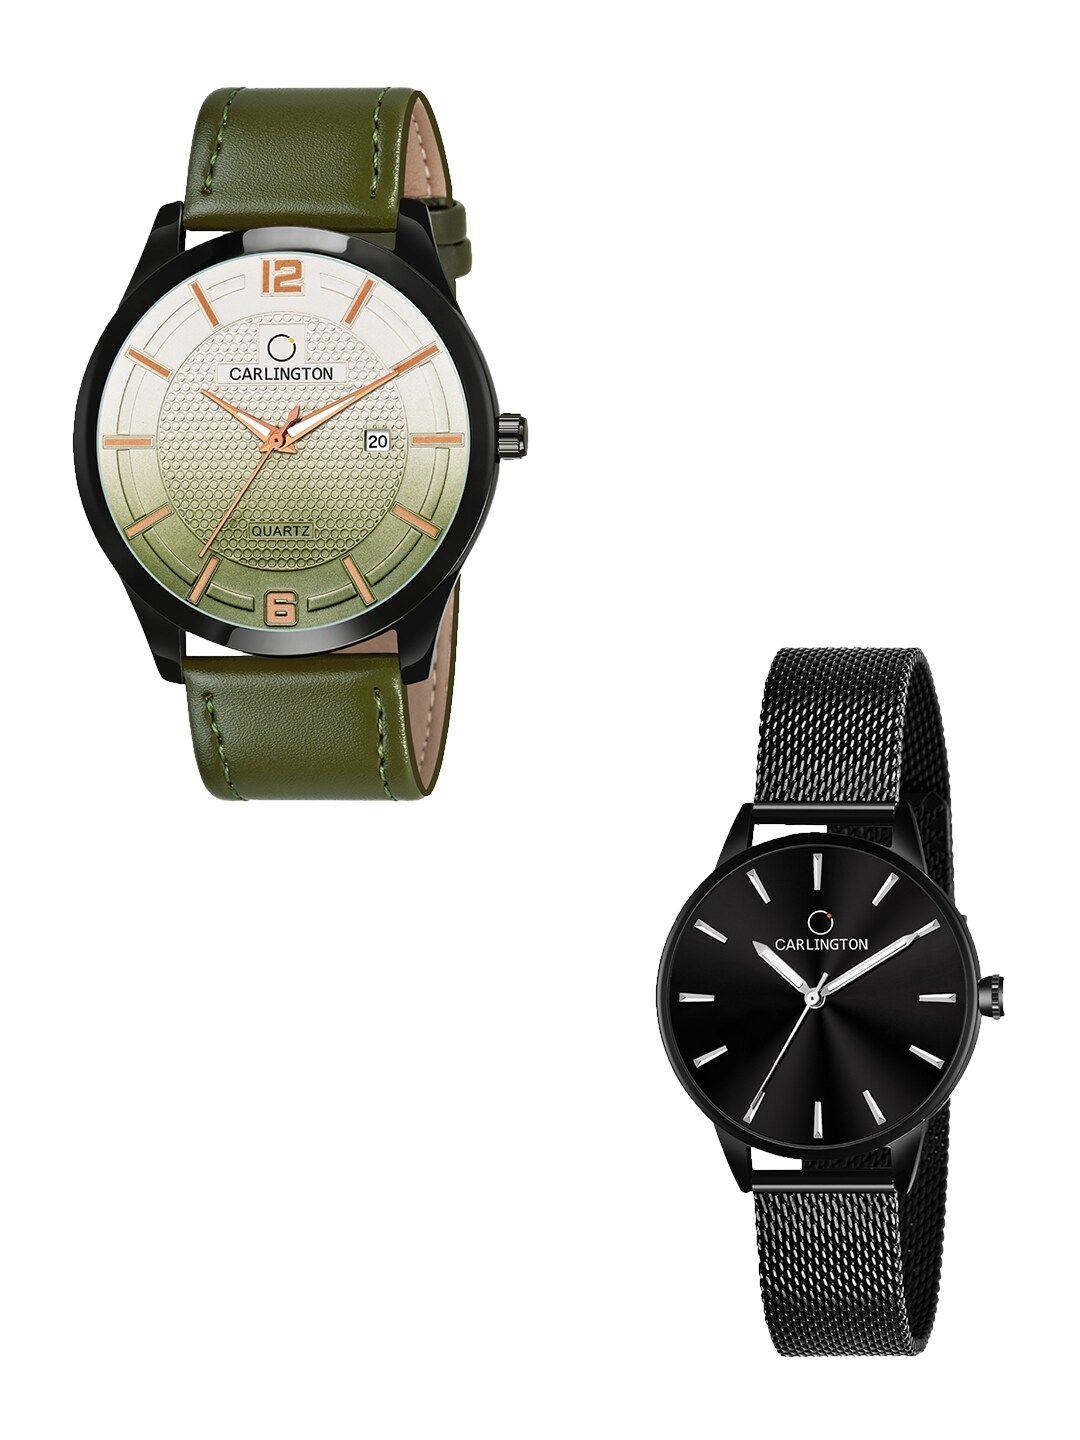 carlington his & her watch gift set combo ccombo ct1010 green - ct2007 black